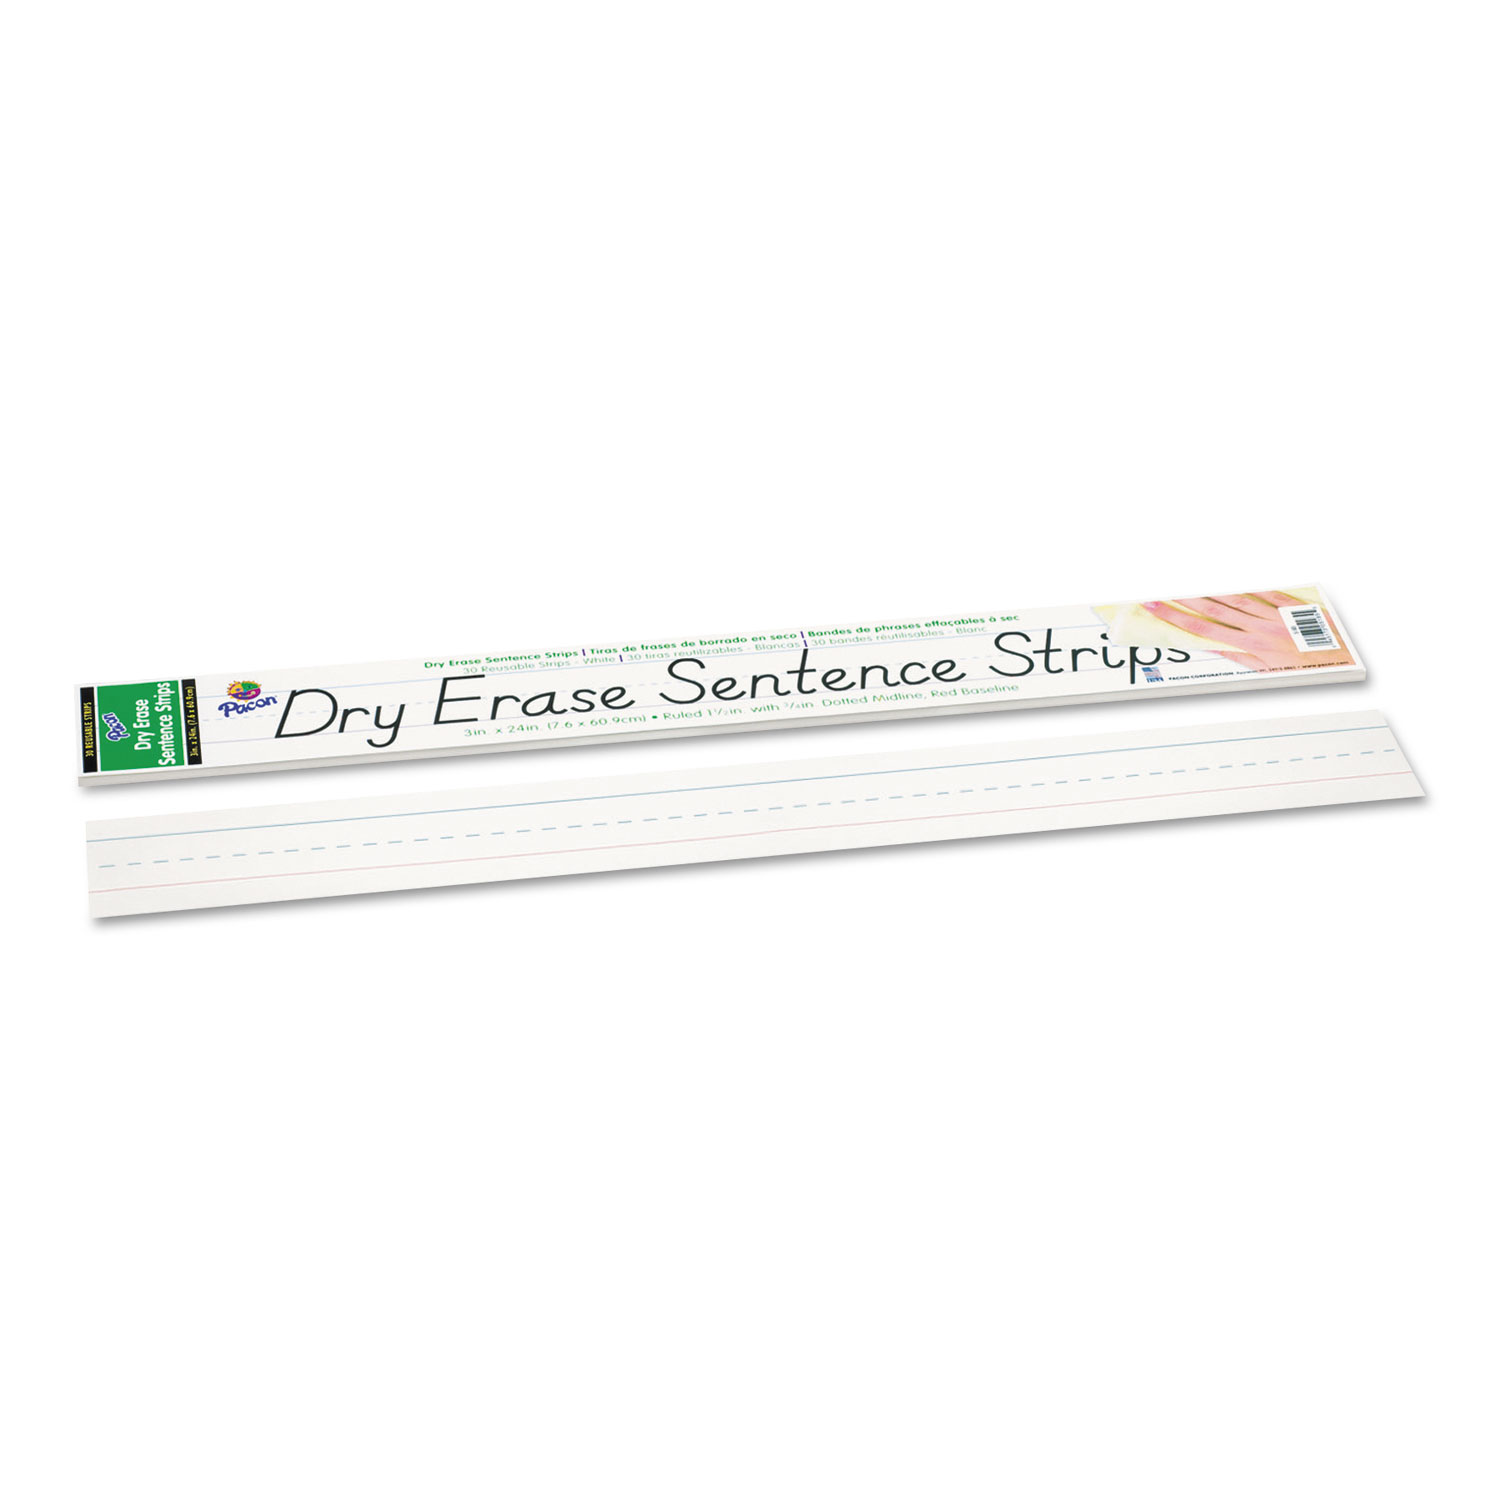 Dry Erase Sentence Strips, 24 x 3, White, 30/Pack